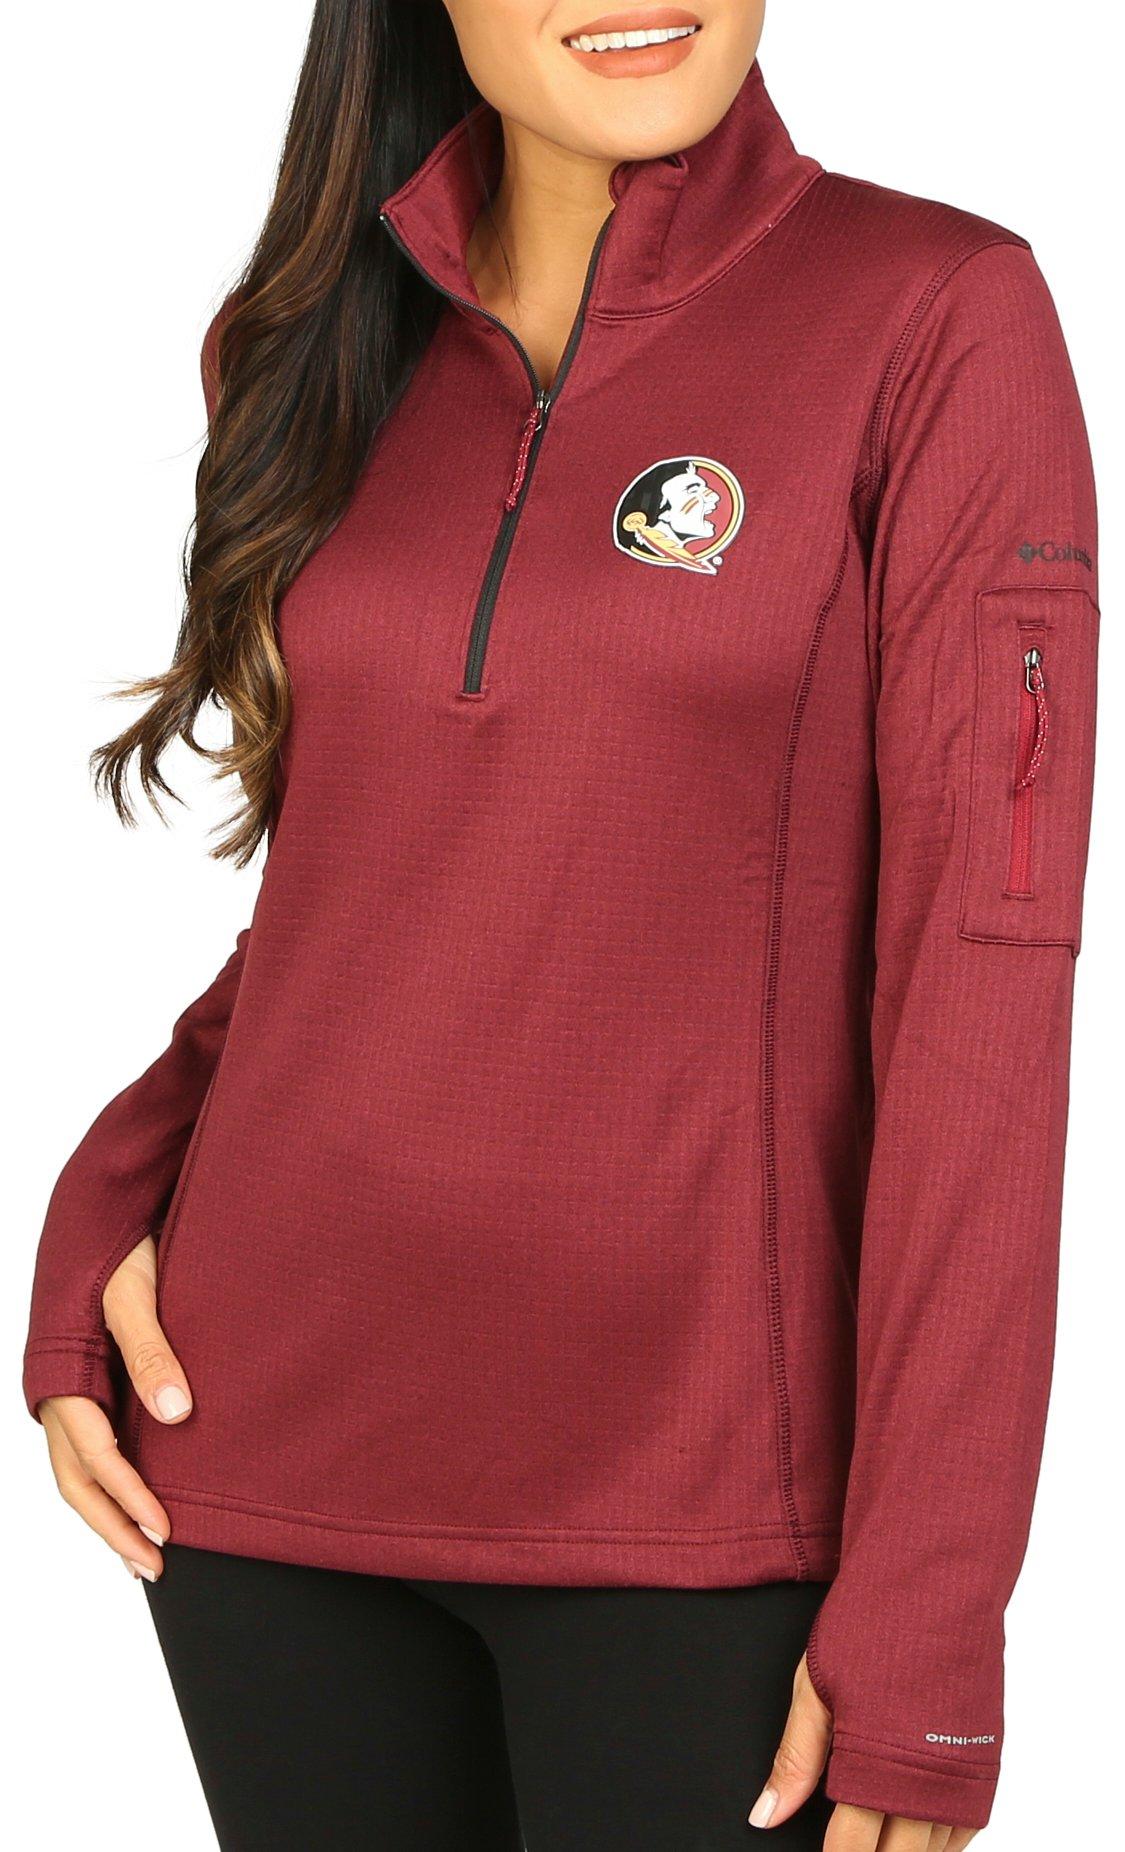 FSU Seminoles Womens Quarter Zip Long Sleeve Sweatshirt